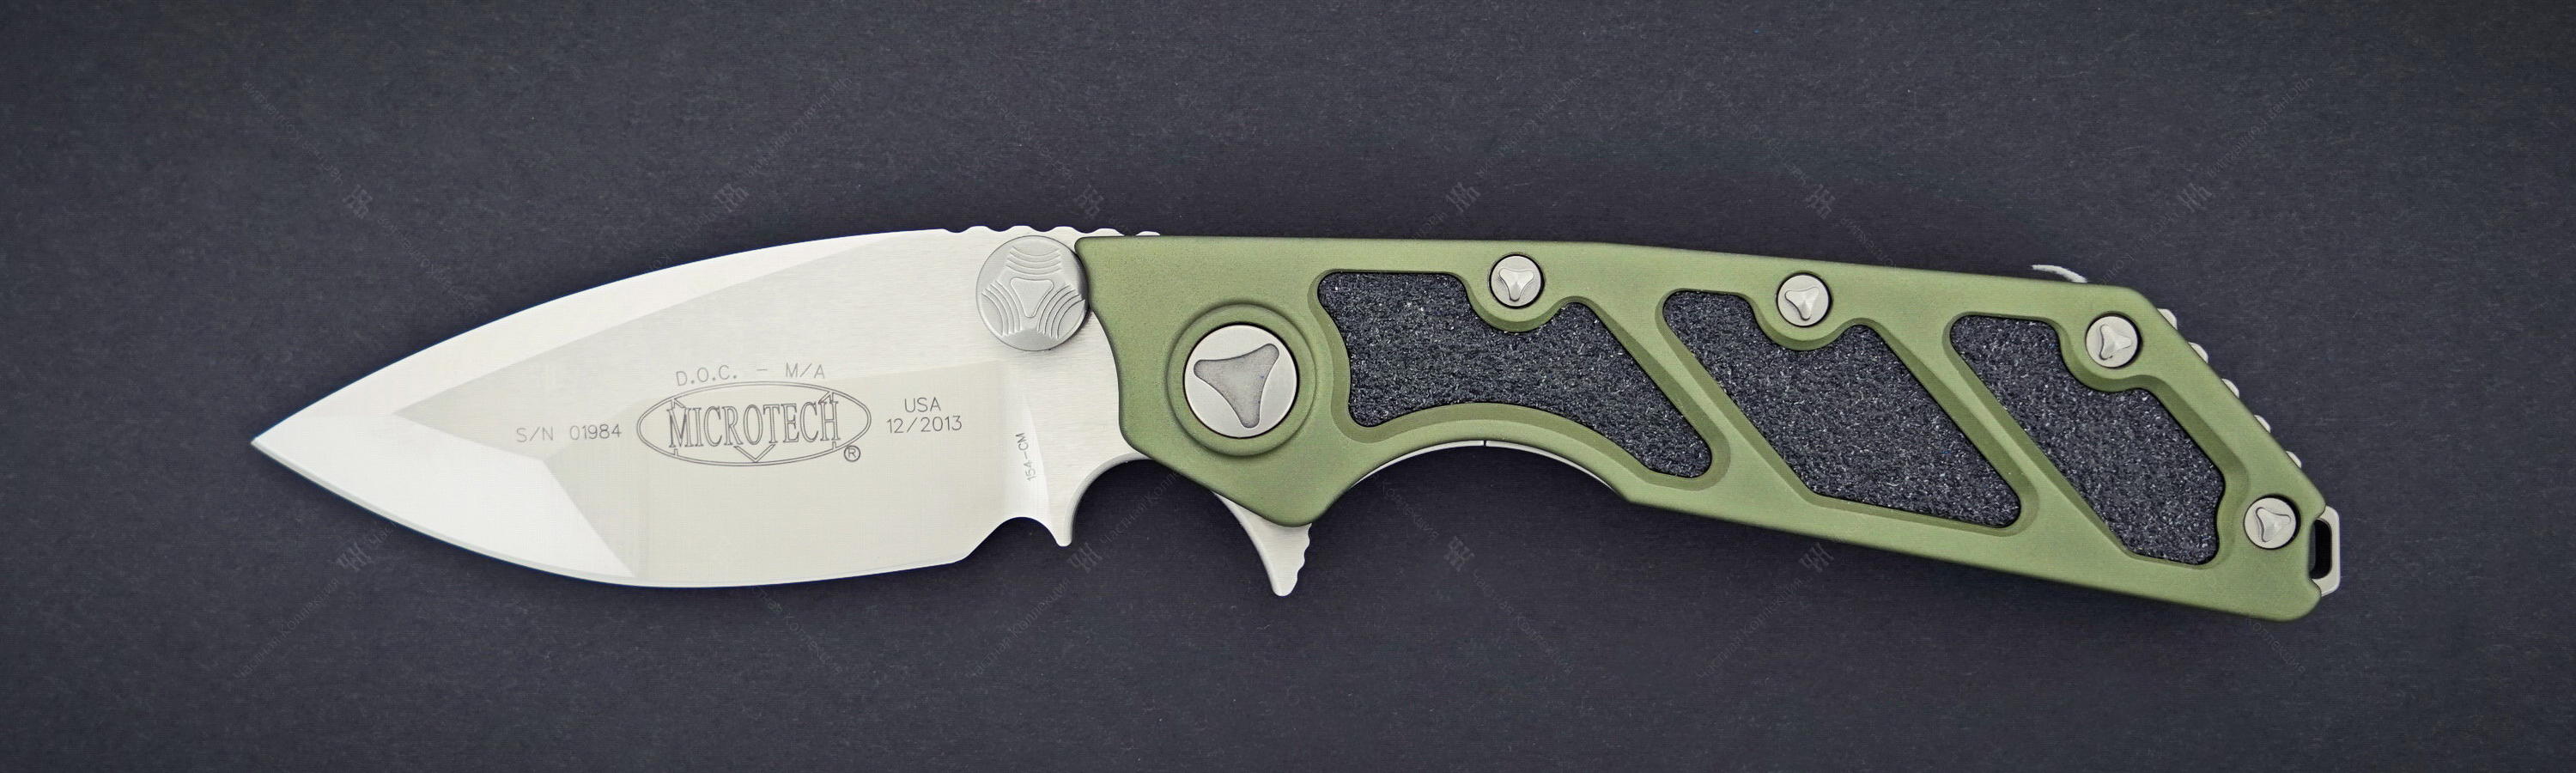 Microtech D.O.C. Green knife